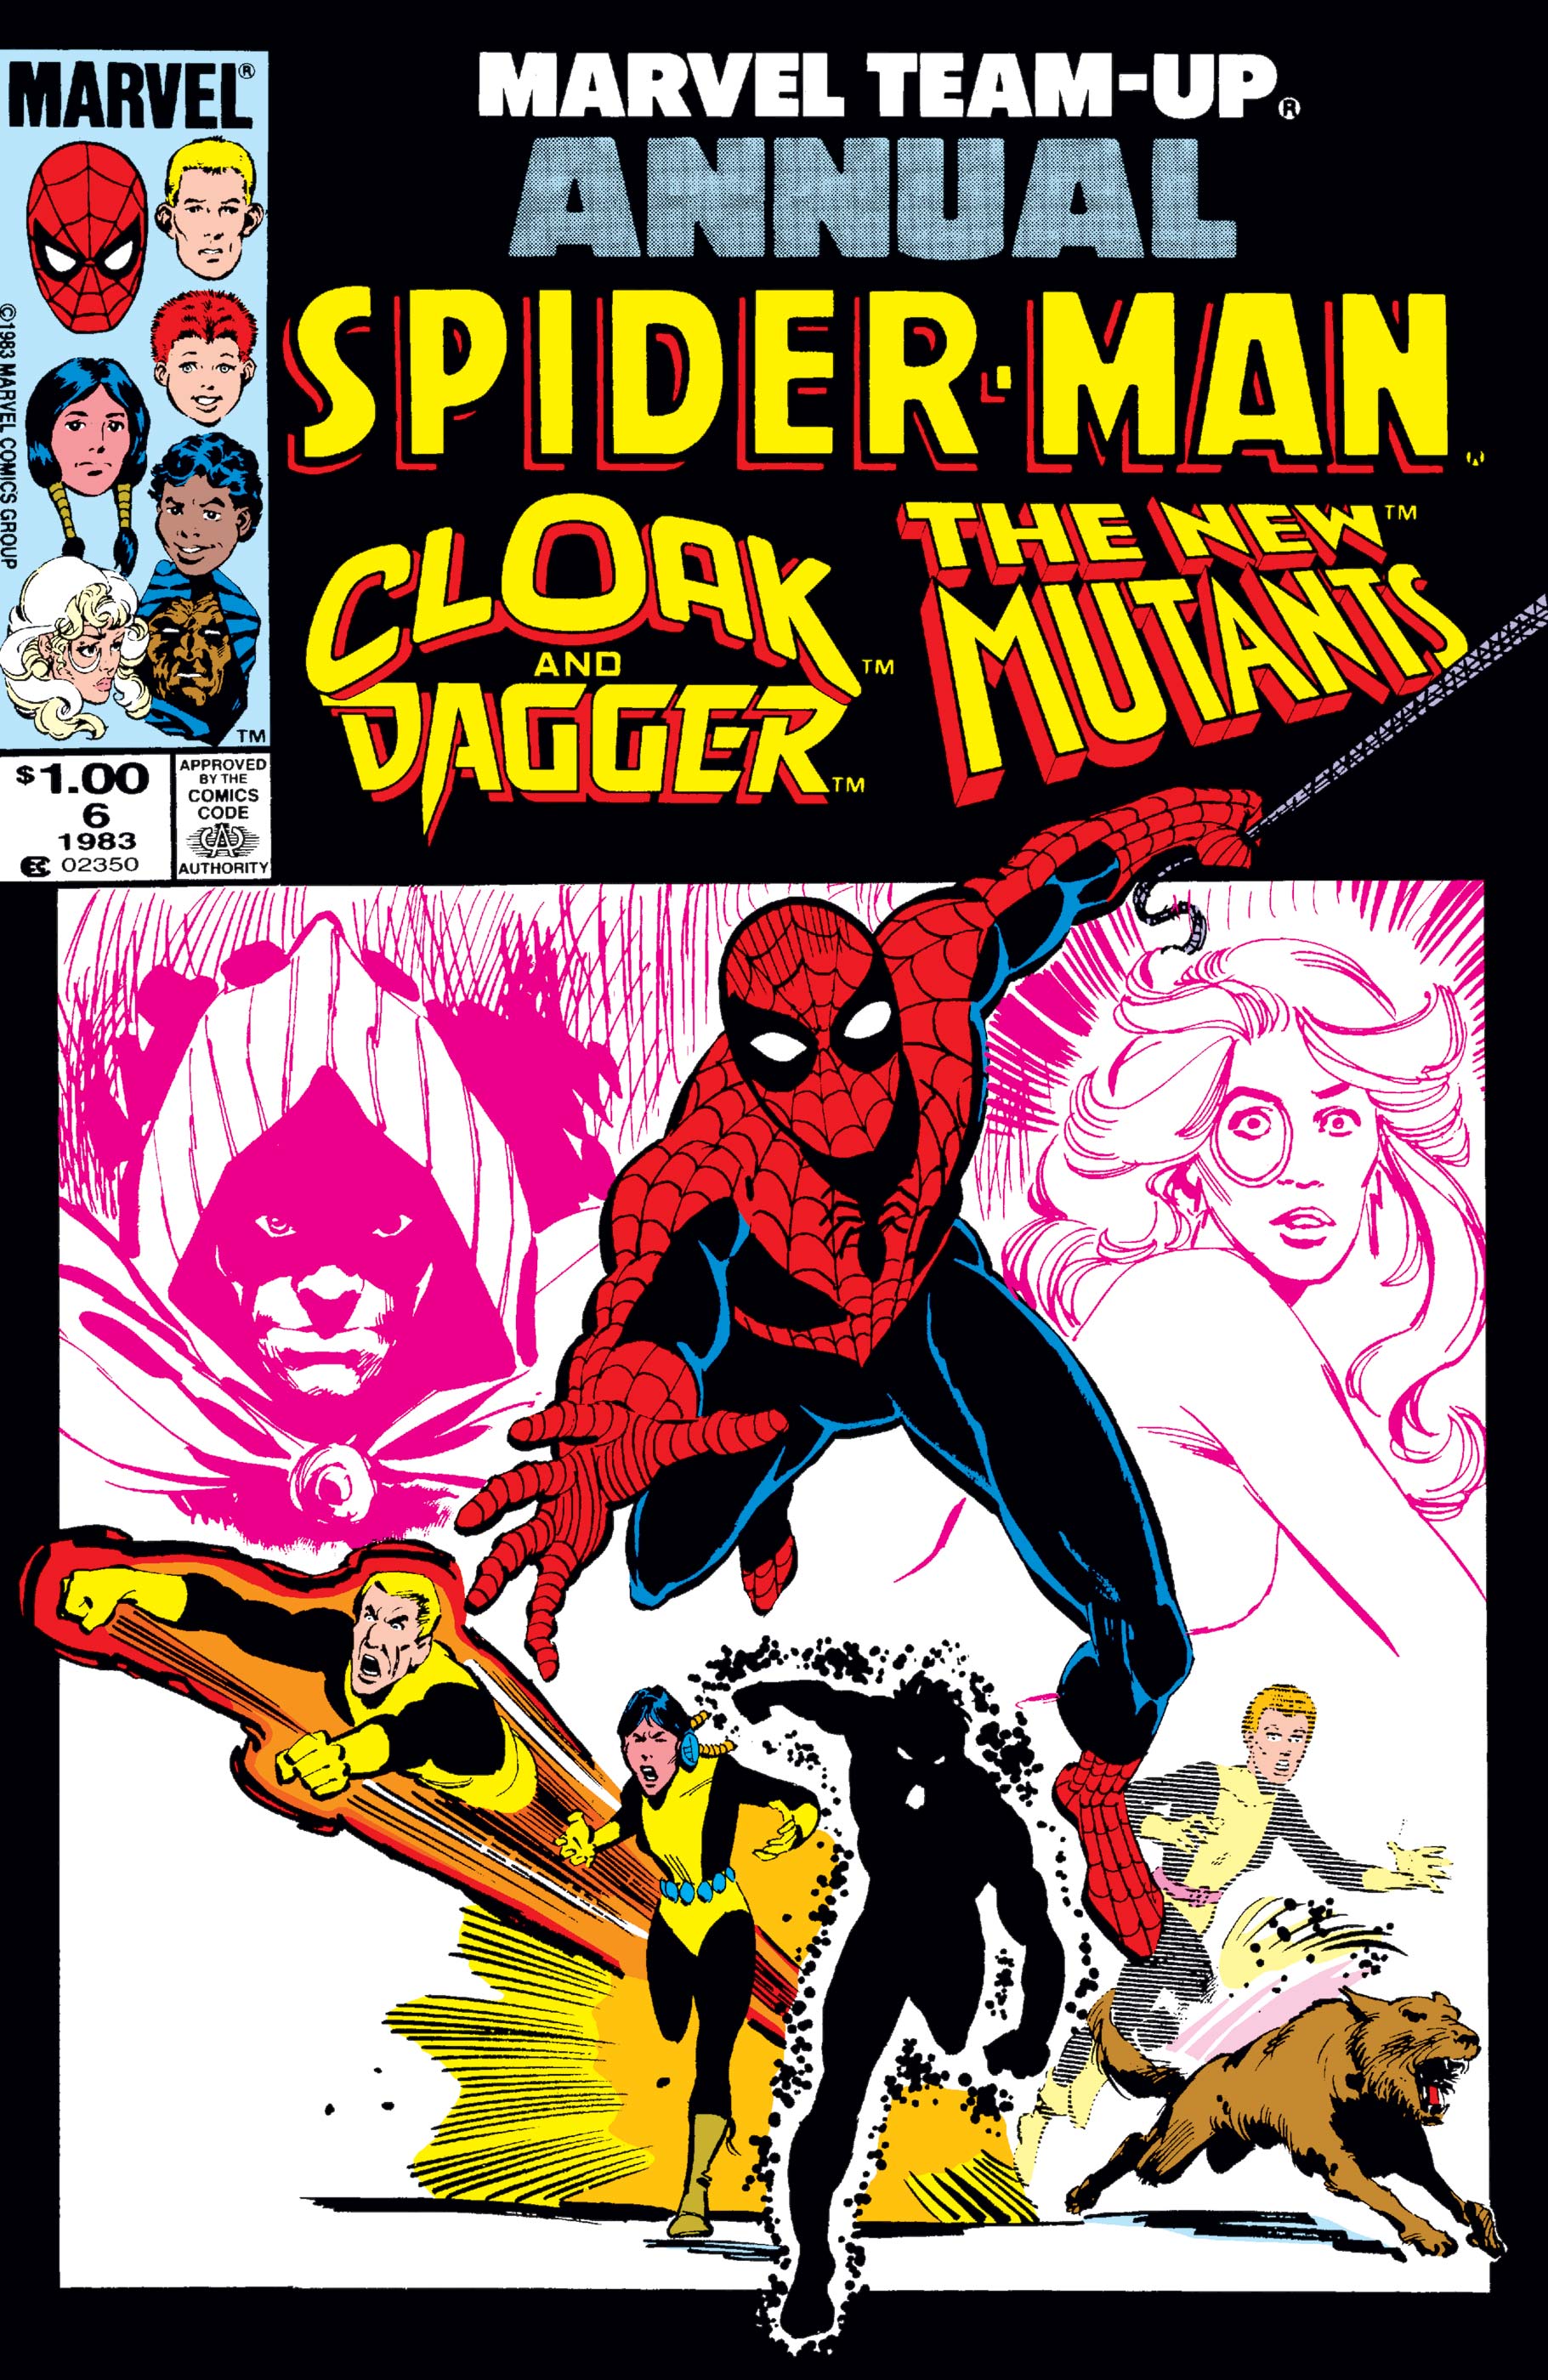 Marvel Team-Up Annual (1976) #6